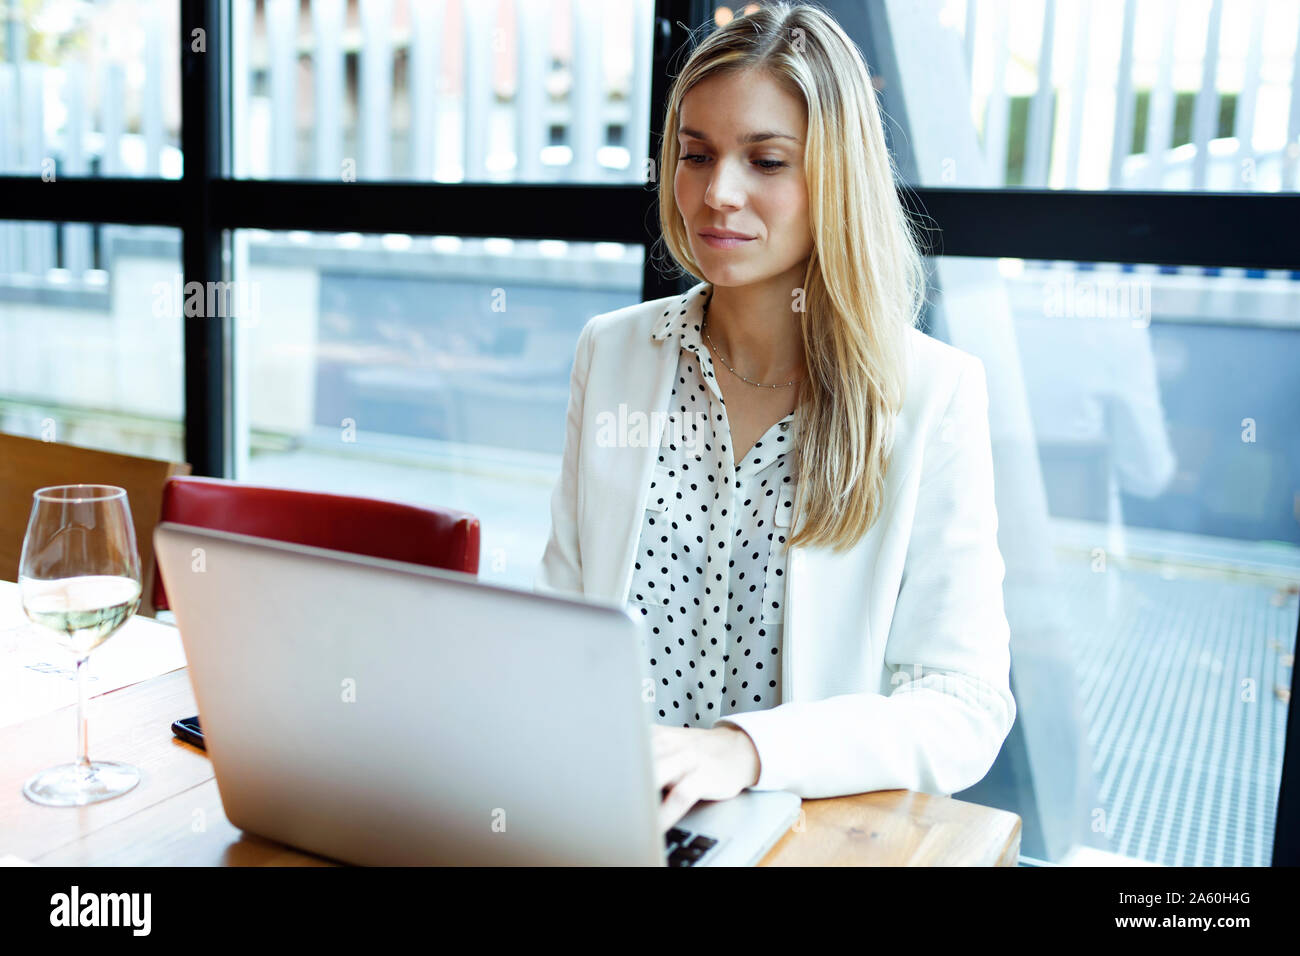 Businesswoman using laptop in a restaurant Banque D'Images